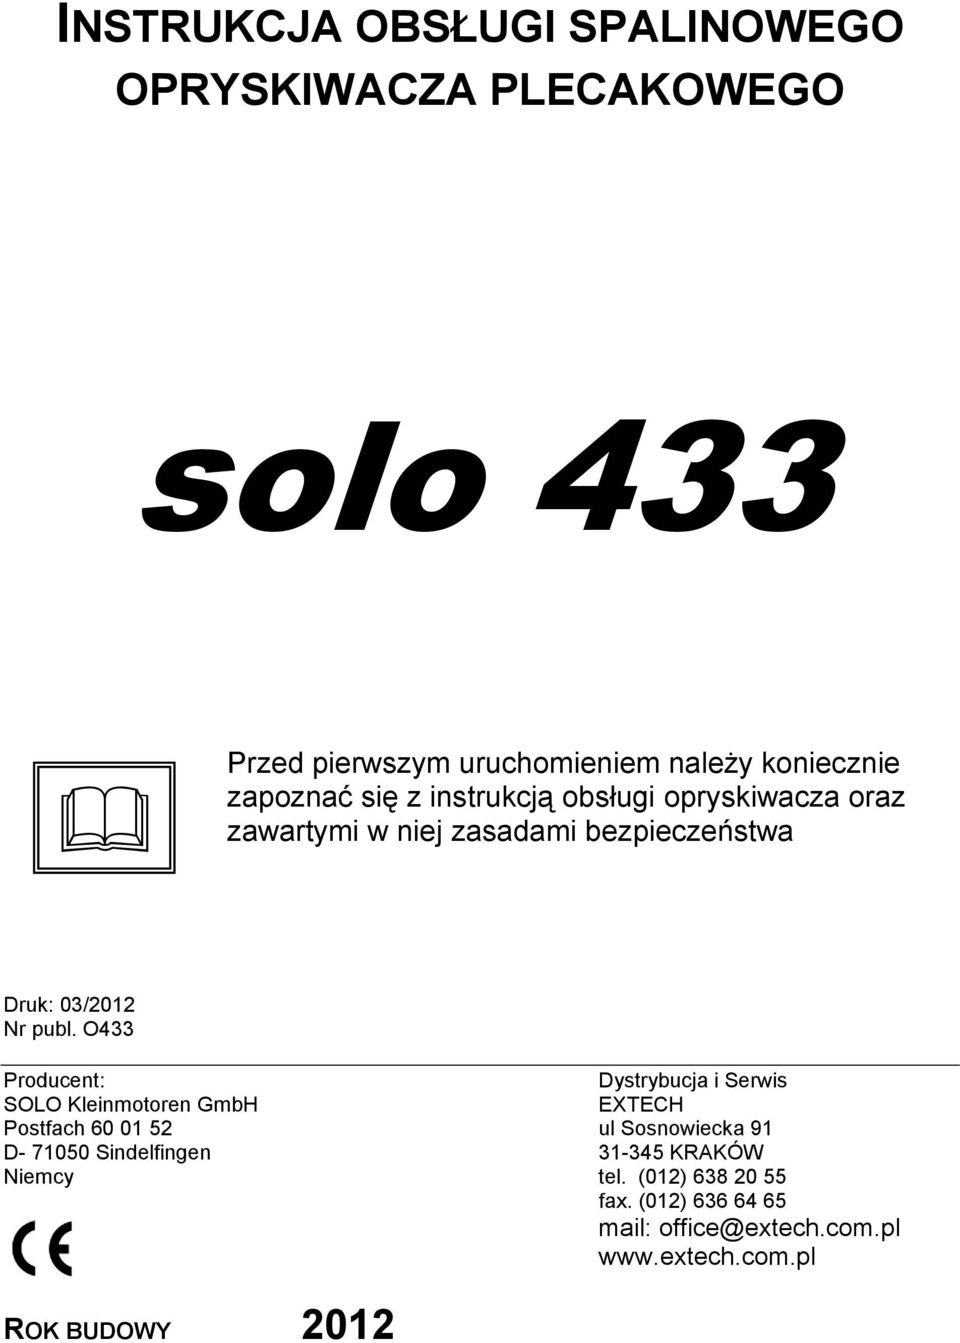 O433 Producent: SOLO Kleinmotoren GmbH Dystrybucja i Serwis EXTECH Postfach 60 01 52 ul Sosnowiecka 91 D- 71050